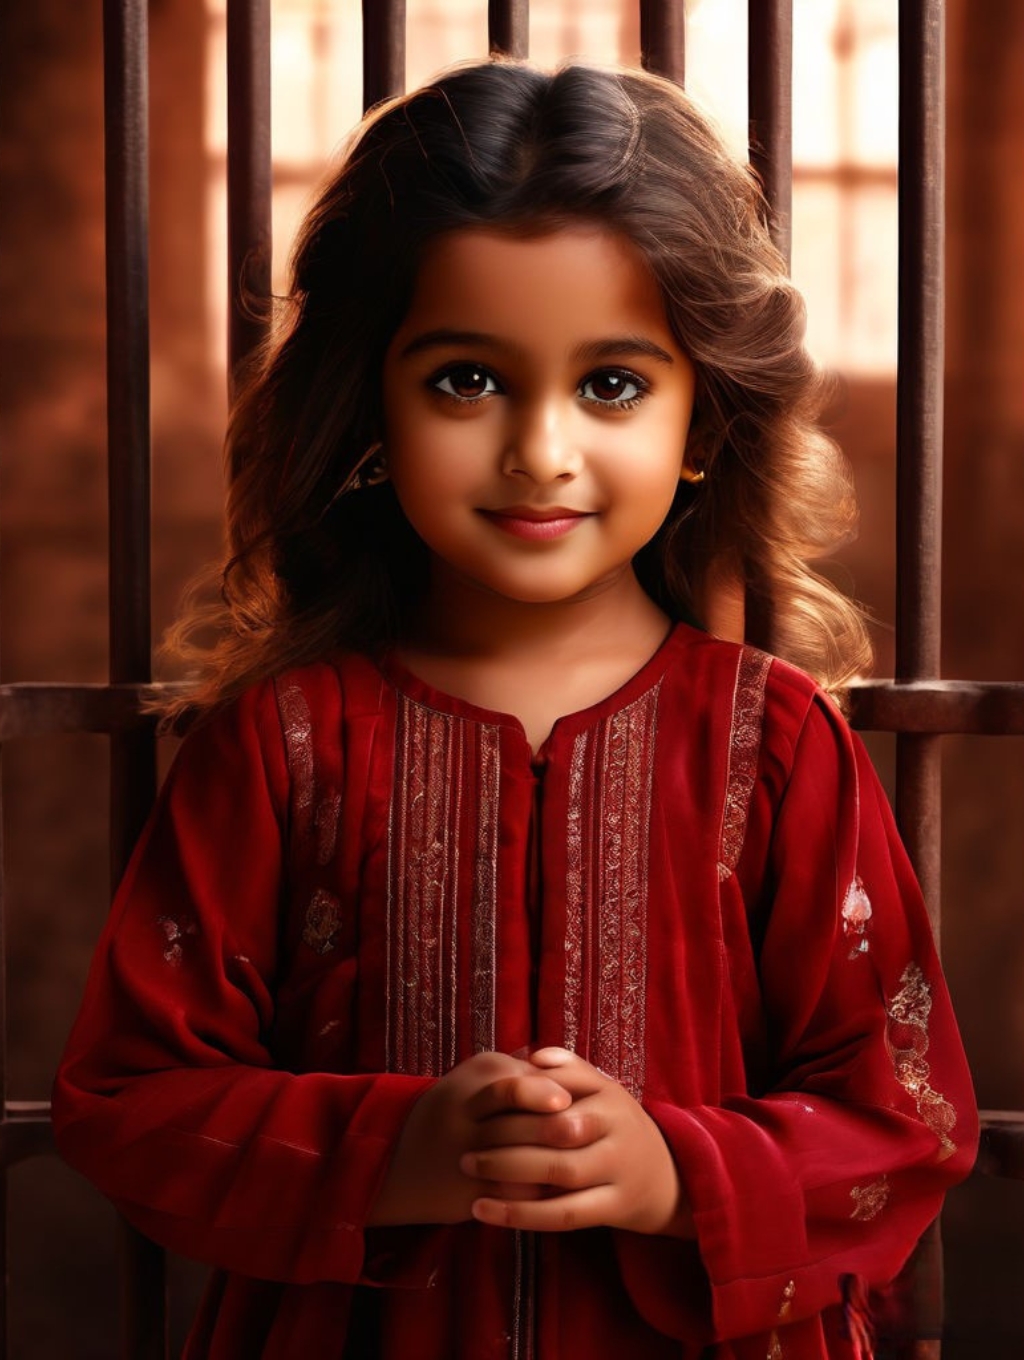 Indian Girl: Custom Frames & Portrait Photography-Theme:6